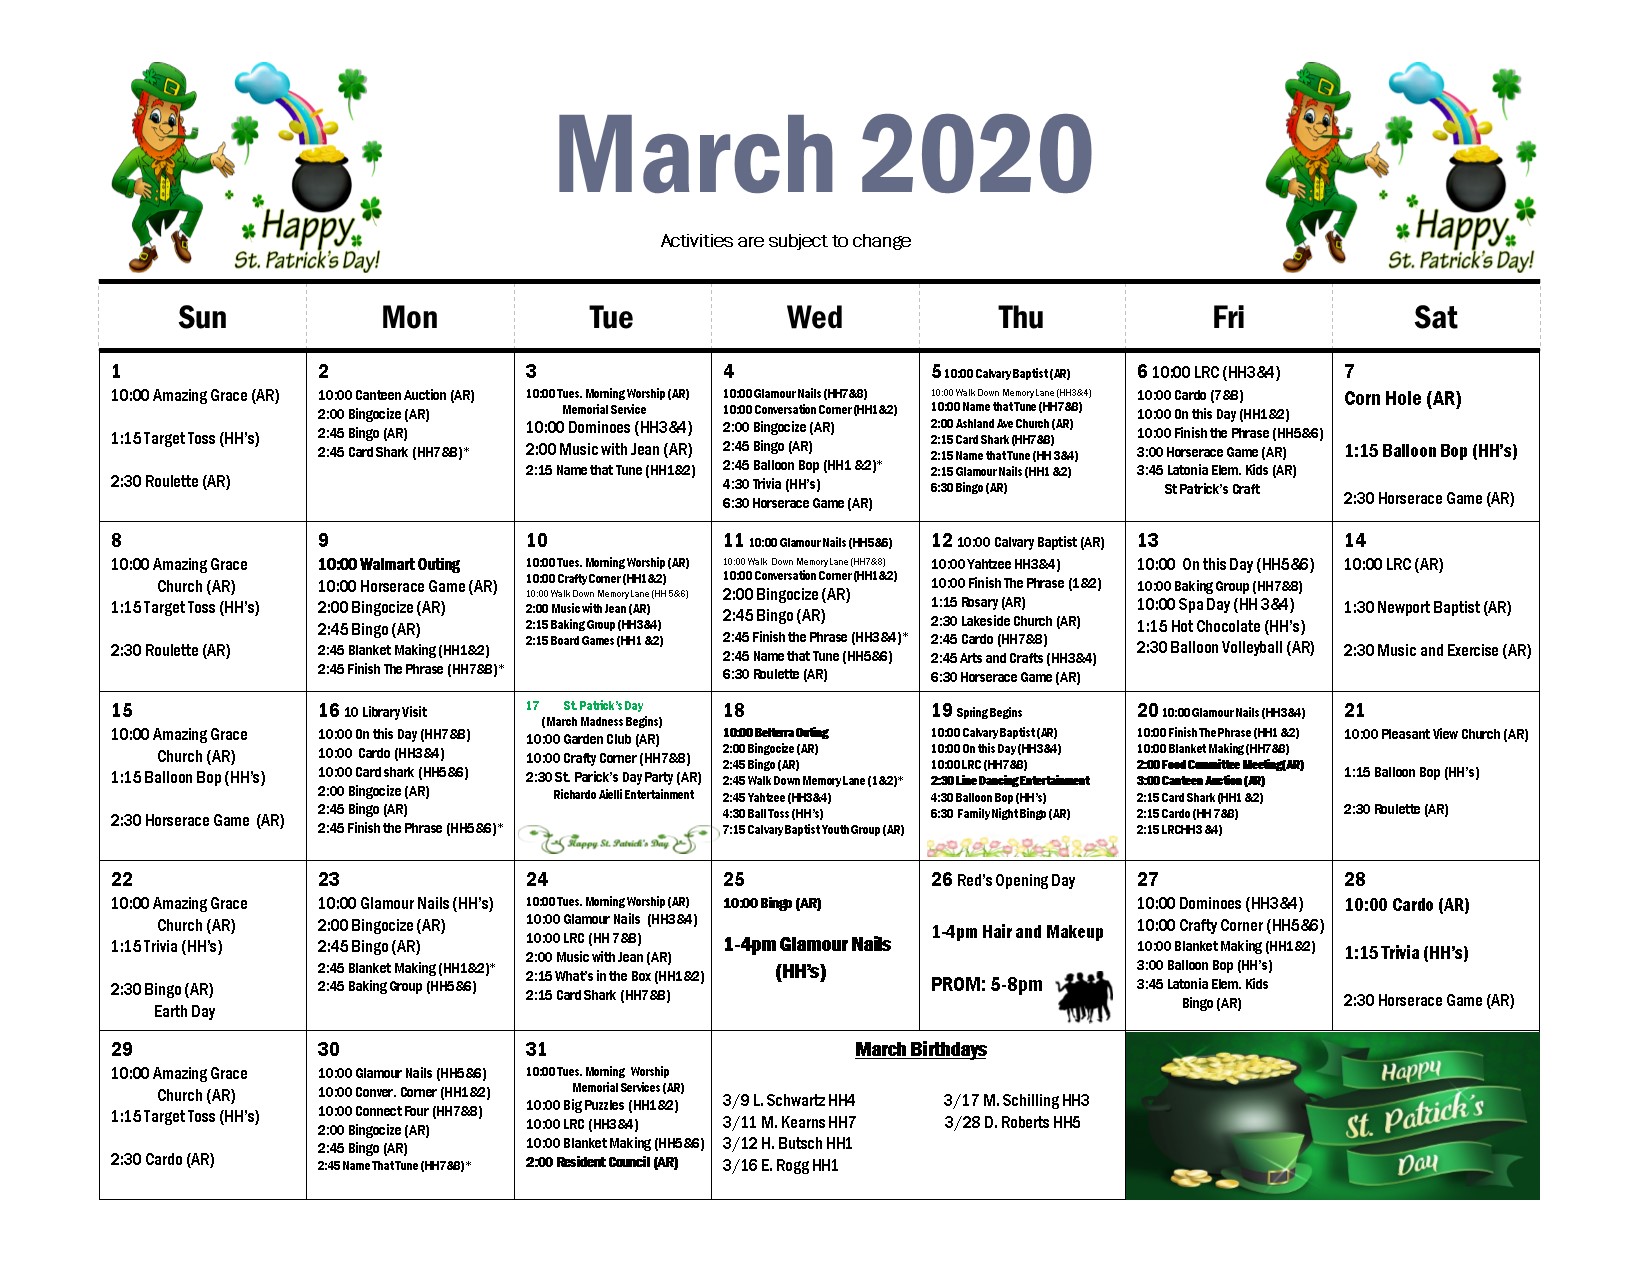 rosedale March 2020